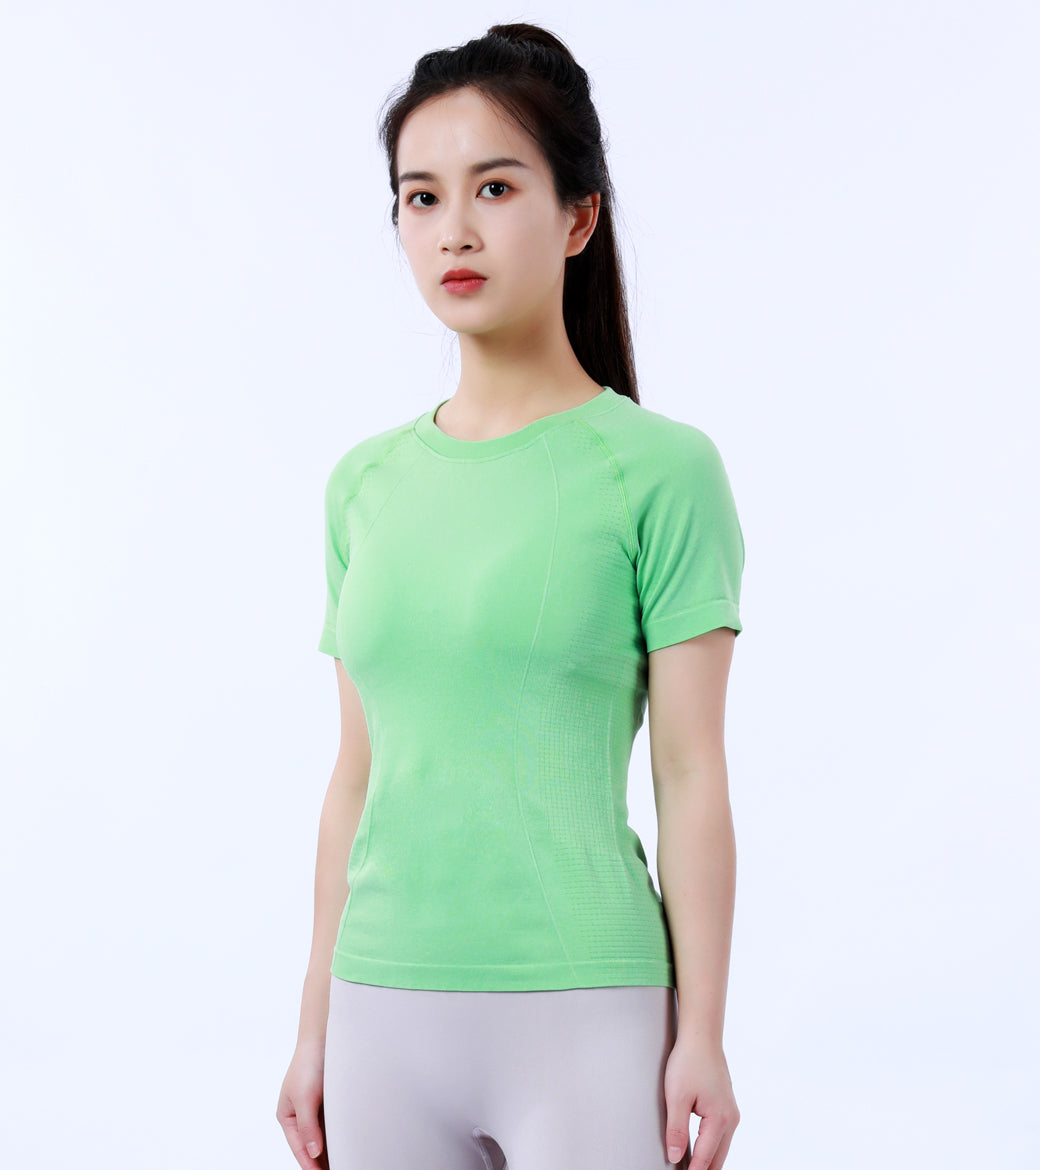 LOVESOFT Women Seamless Workout Shirts Yoga Tops Running Fitness Sports Short Sleeve Tees